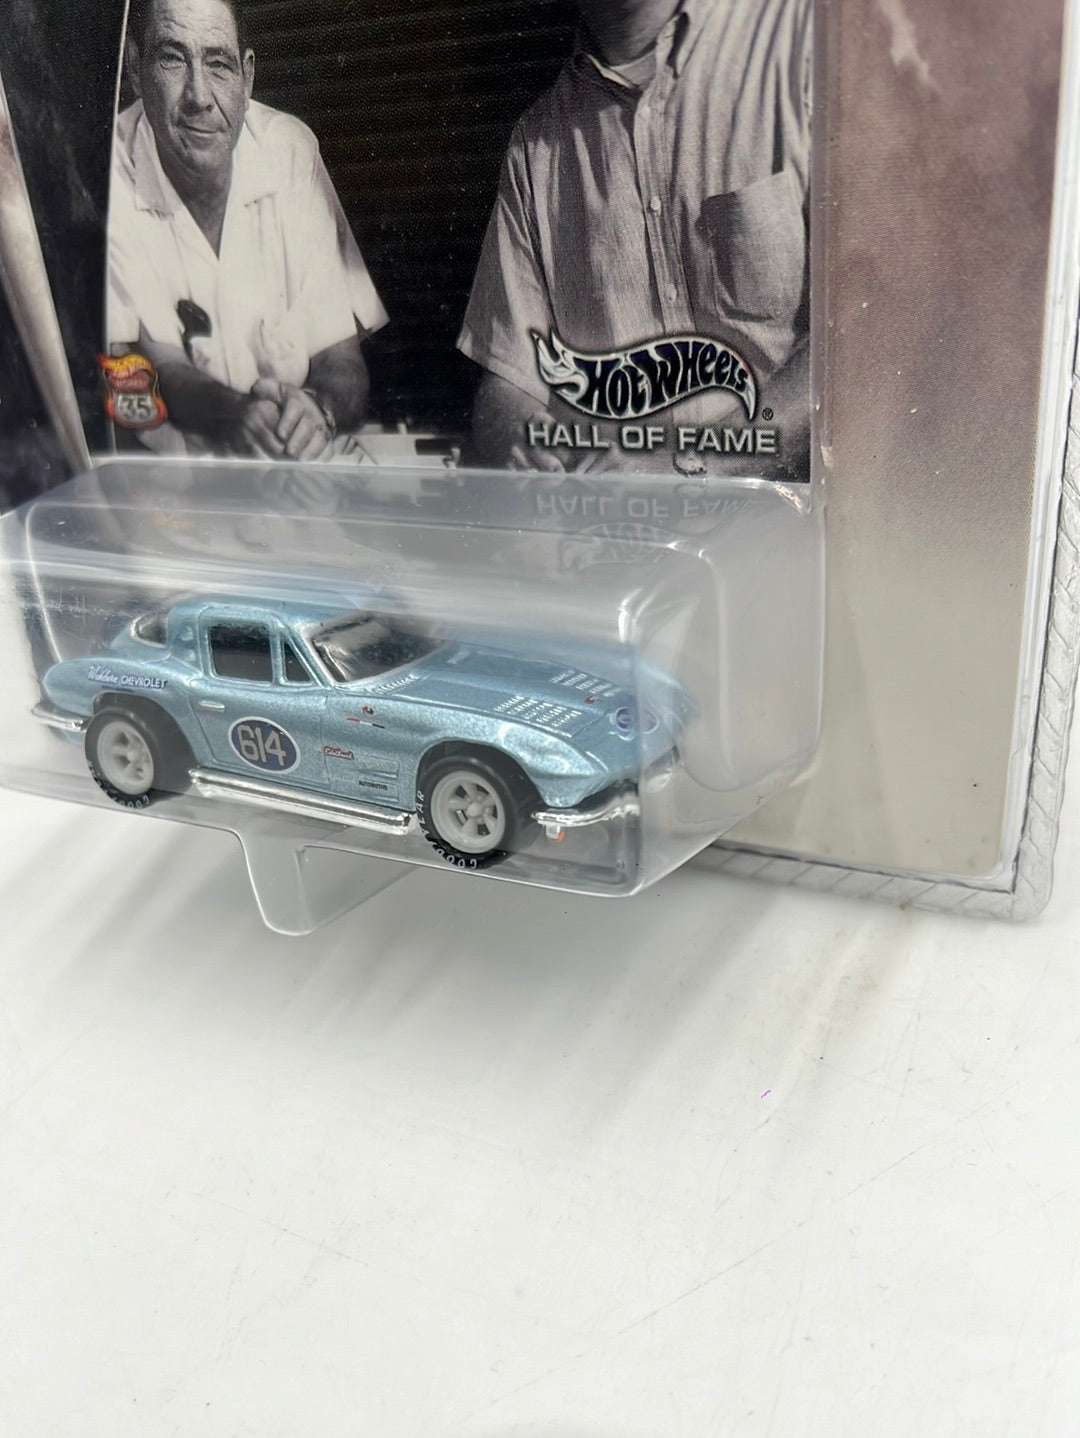 Hot Wheels Legends Hall of Fame Corvette Stingray Vic Edelbrock 272I